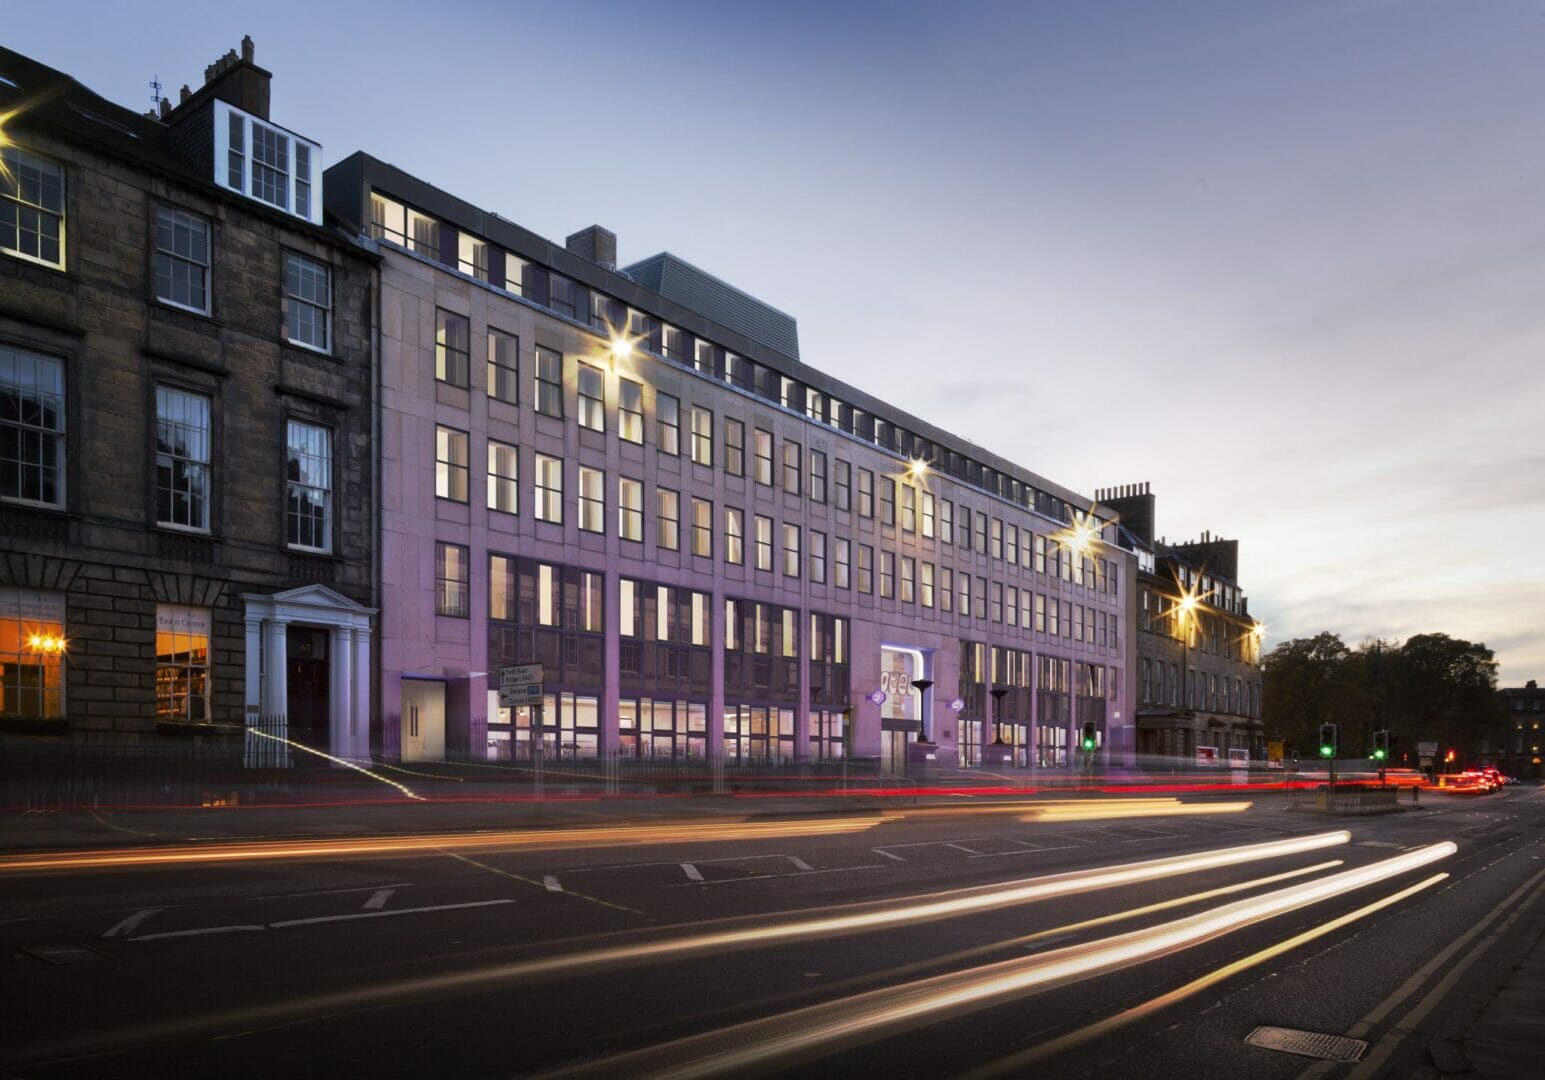 YOTEL BRINGS BRAND TO SCOTLAND WITH FIRST HOTEL IN EDINBURGH